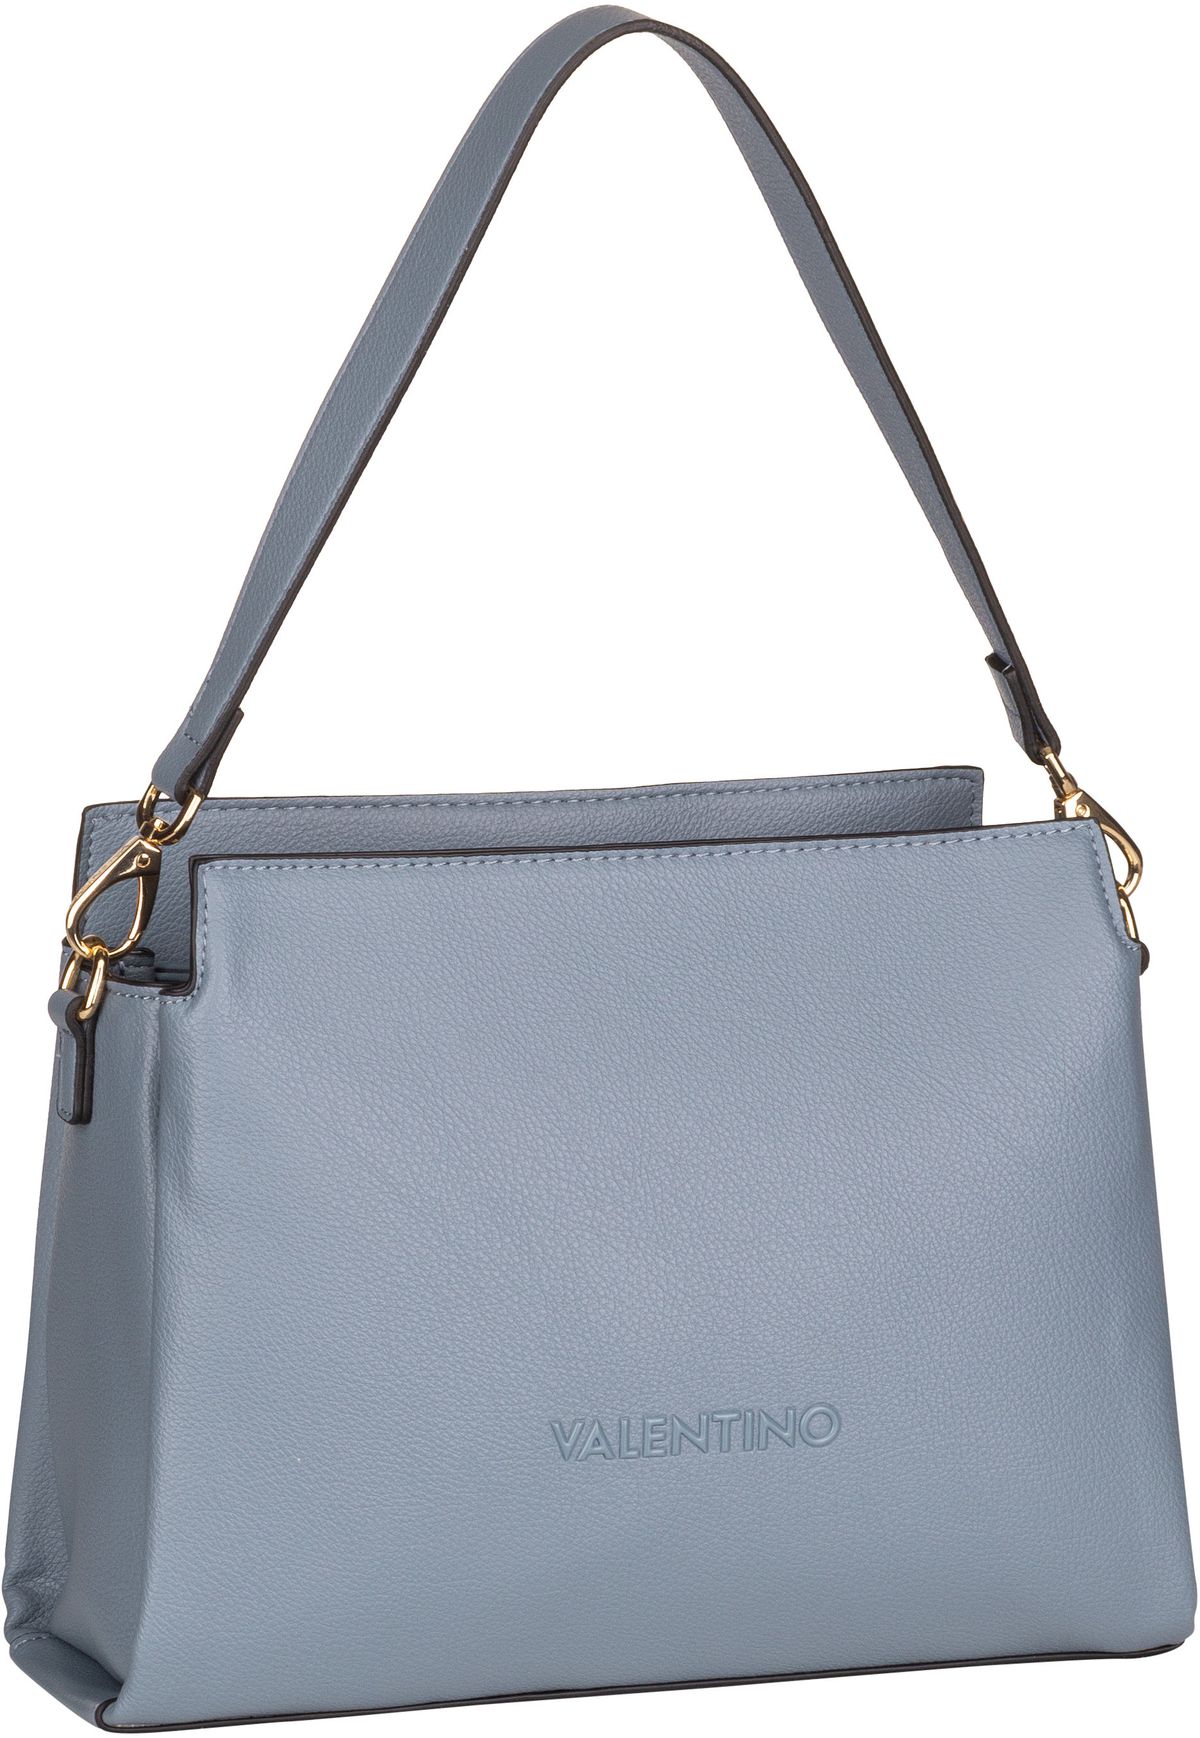 Valentino  Manhattan RE W06 - Hobo Bag - Blau (Polvere)